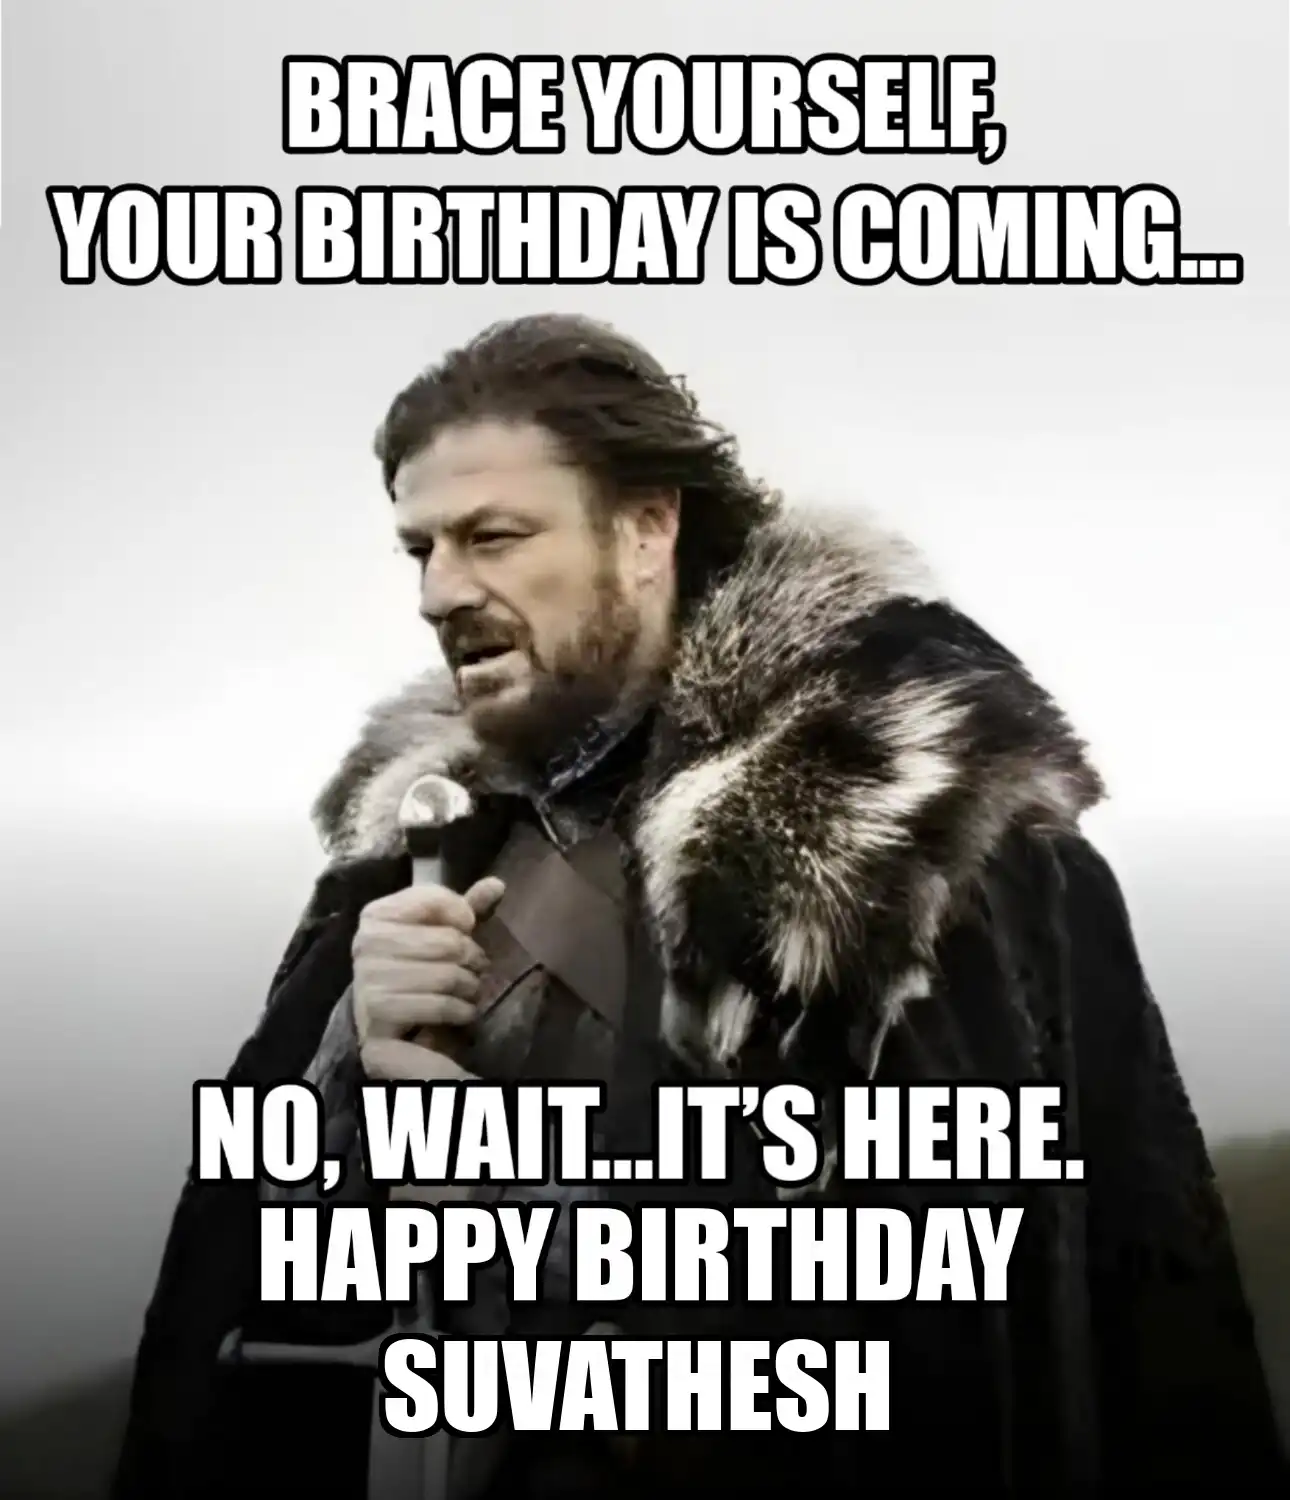 Happy Birthday Suvathesh Brace Yourself Your Birthday Is Coming Meme